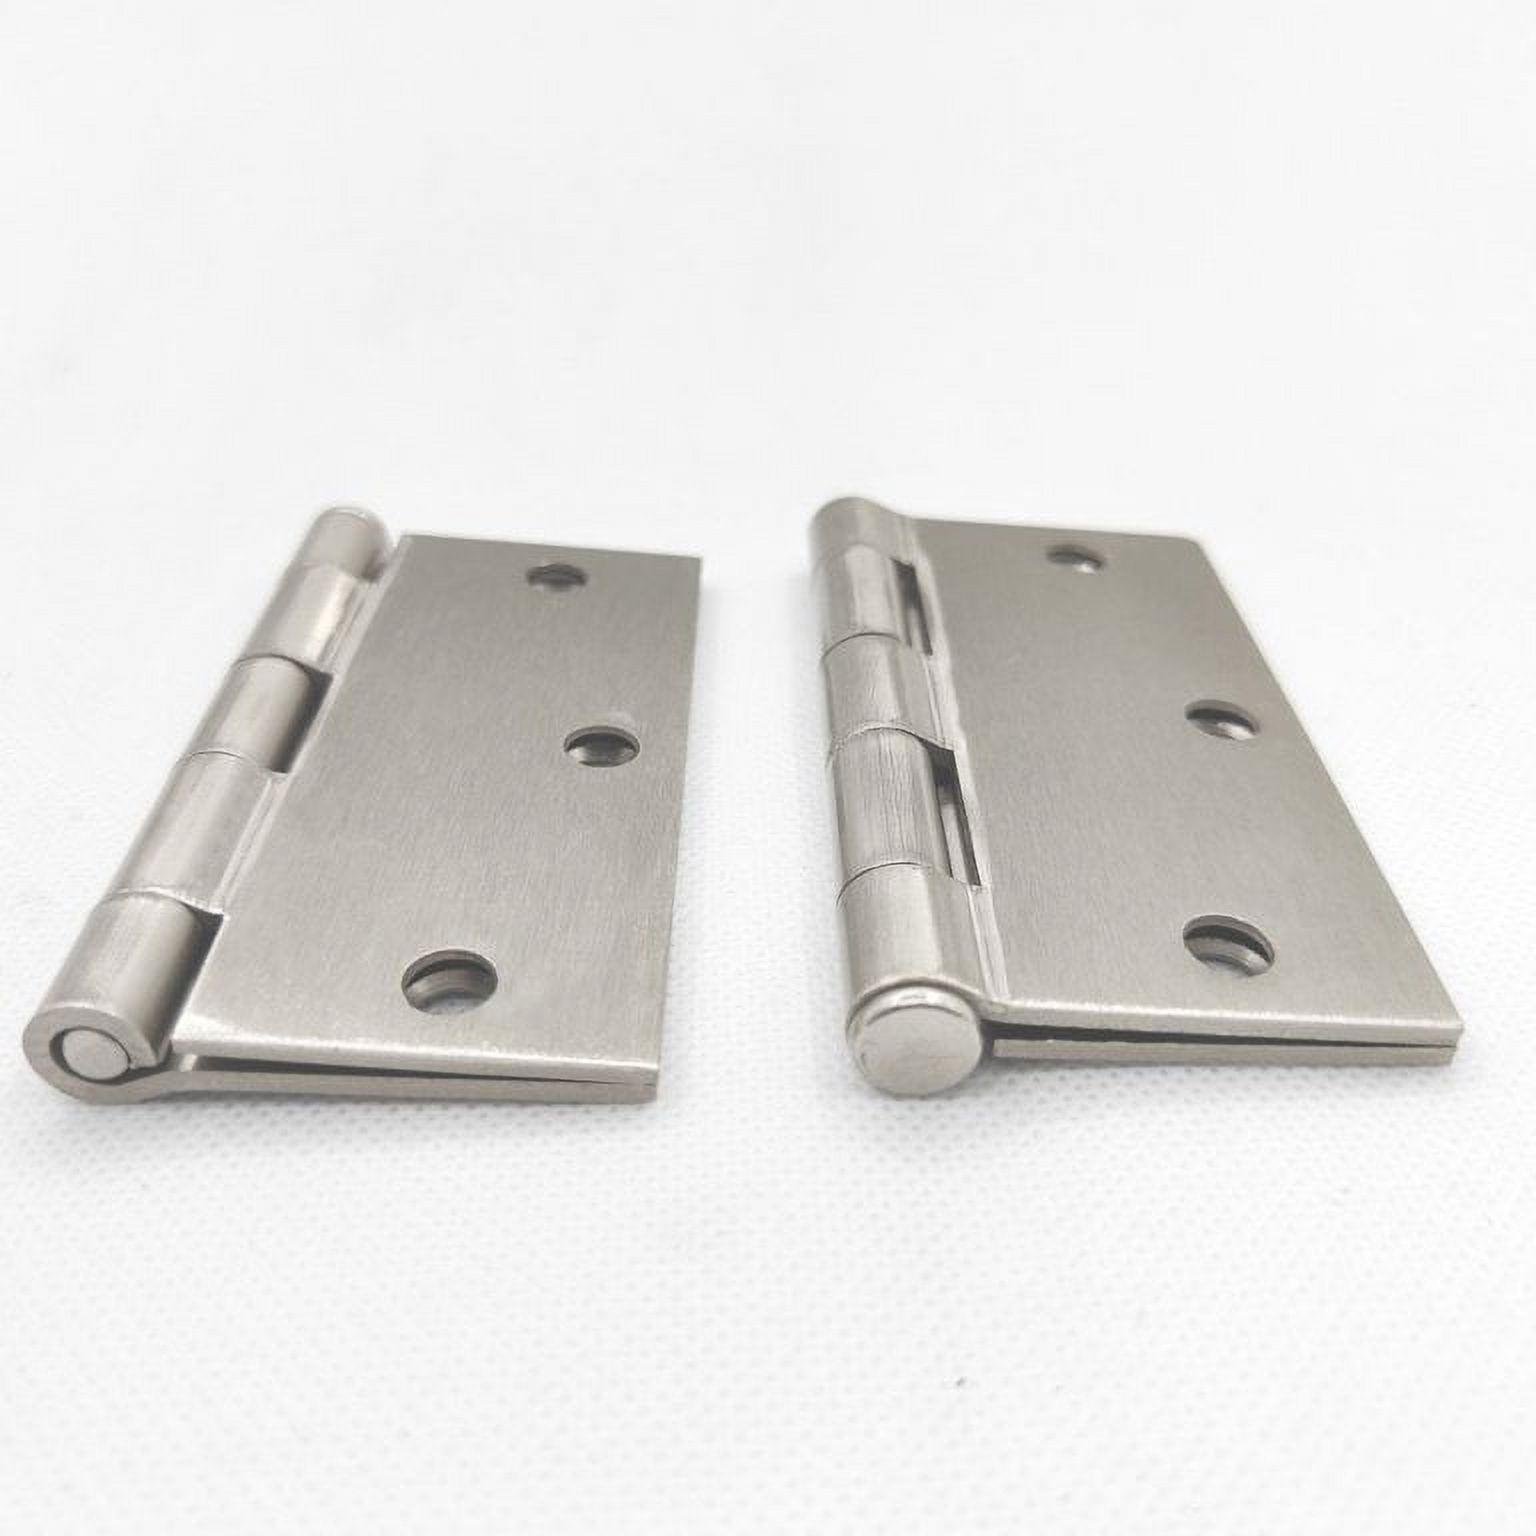 100 PACKS 3.5IN Steel Door Hinge Heavy Duty for Interior & Exterior Door, Square Corner,Thickness:2.2mm,Satin Nickel,Removable pin, with Screws - image 4 of 5